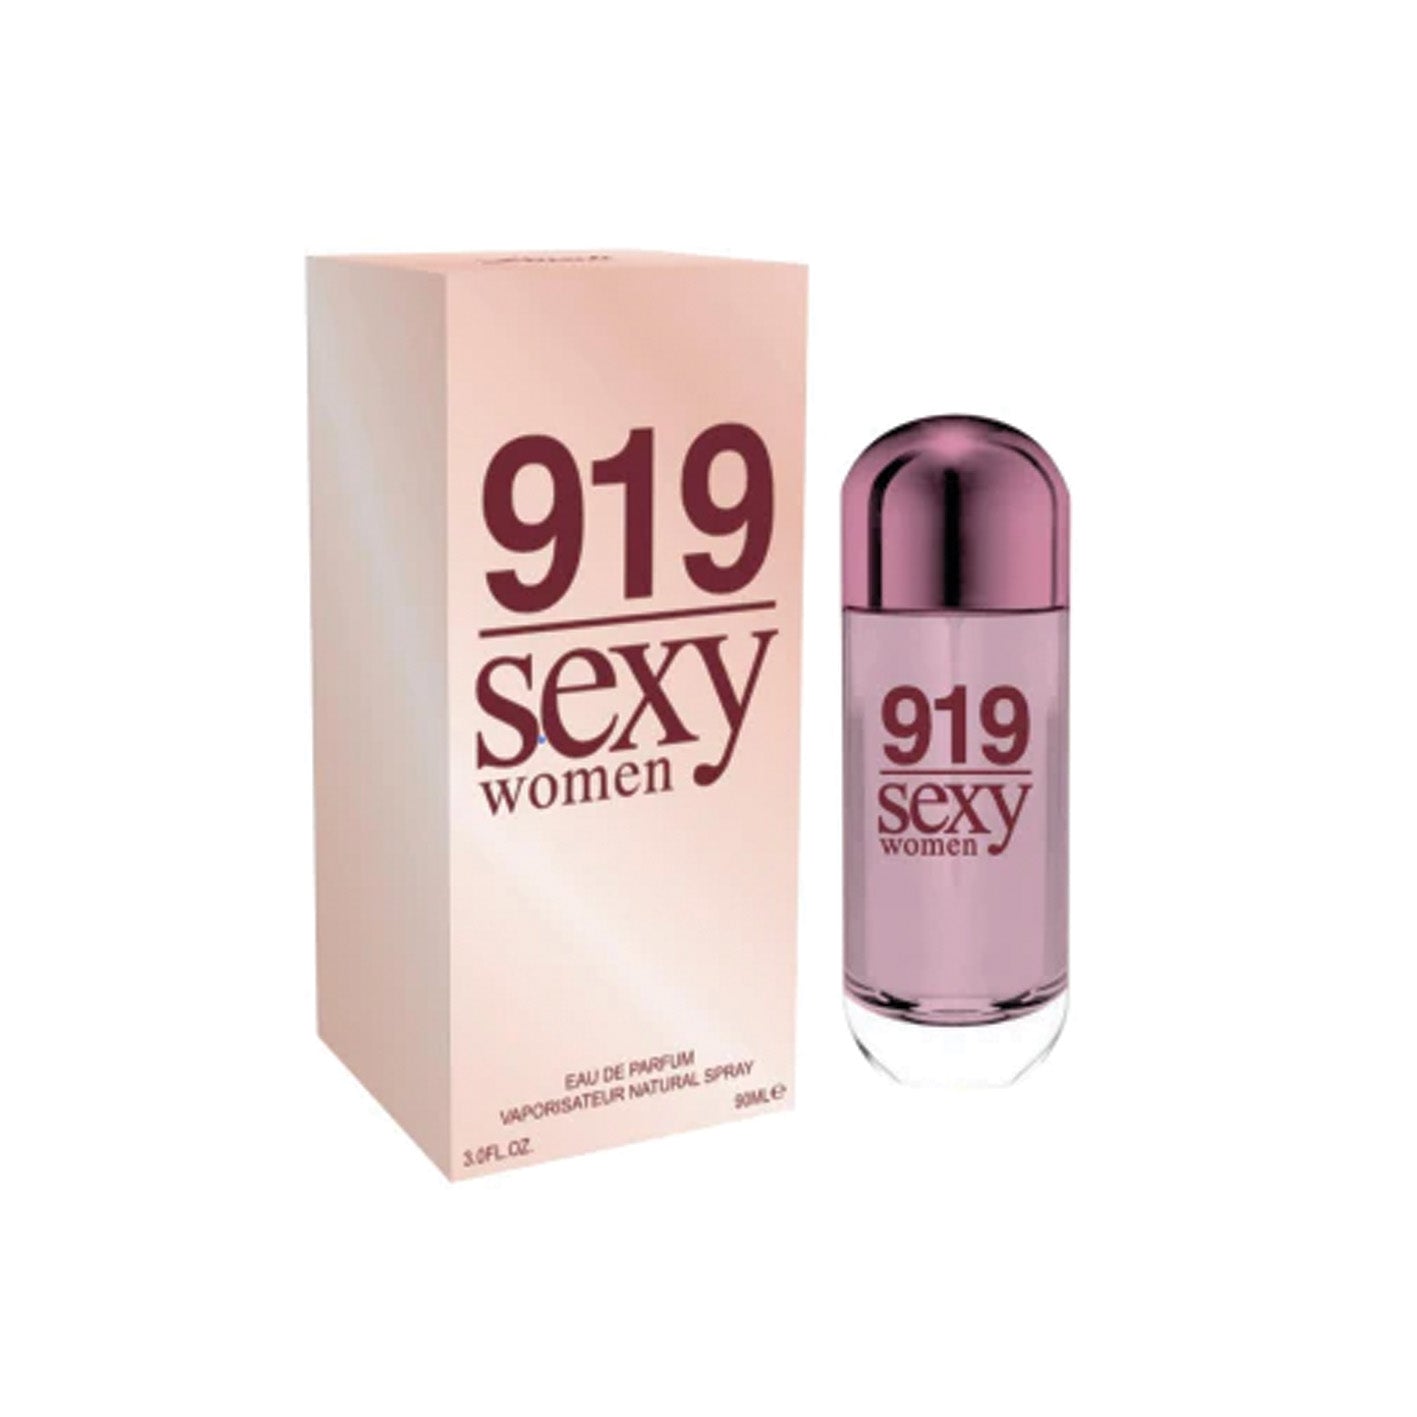 Perfume (919 Sexy Women) 100ml 15294